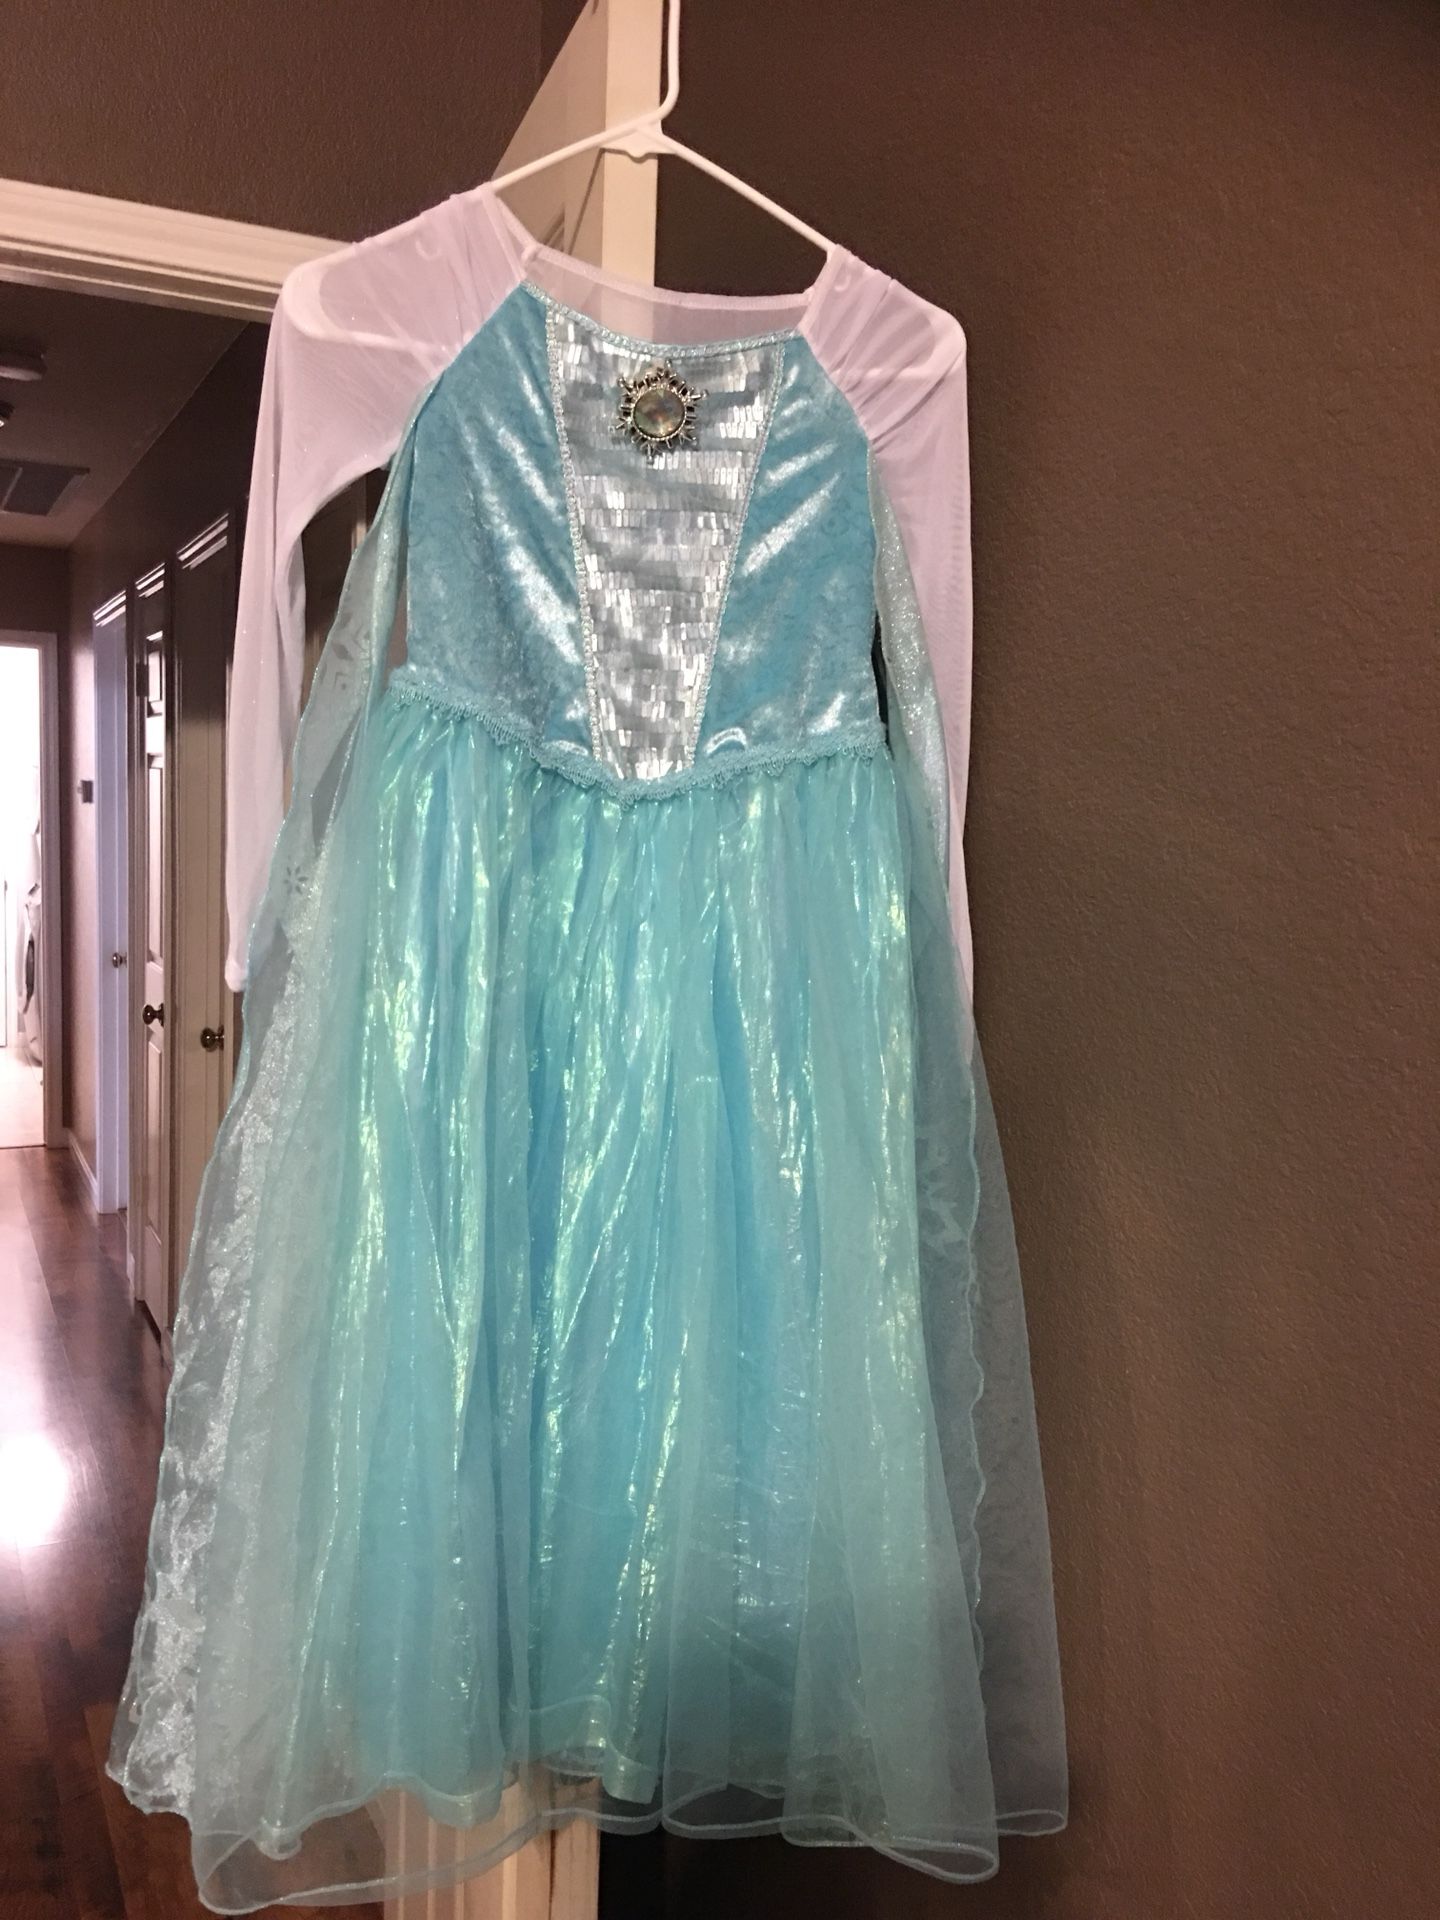 7/8 Elsa dress that sings